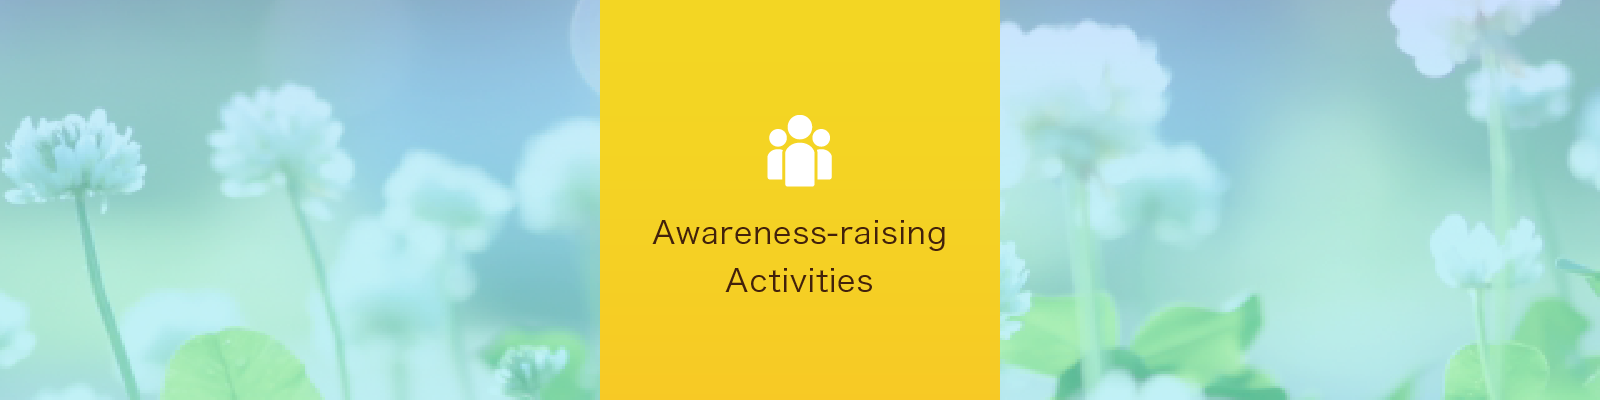 Awareness-raising Activities